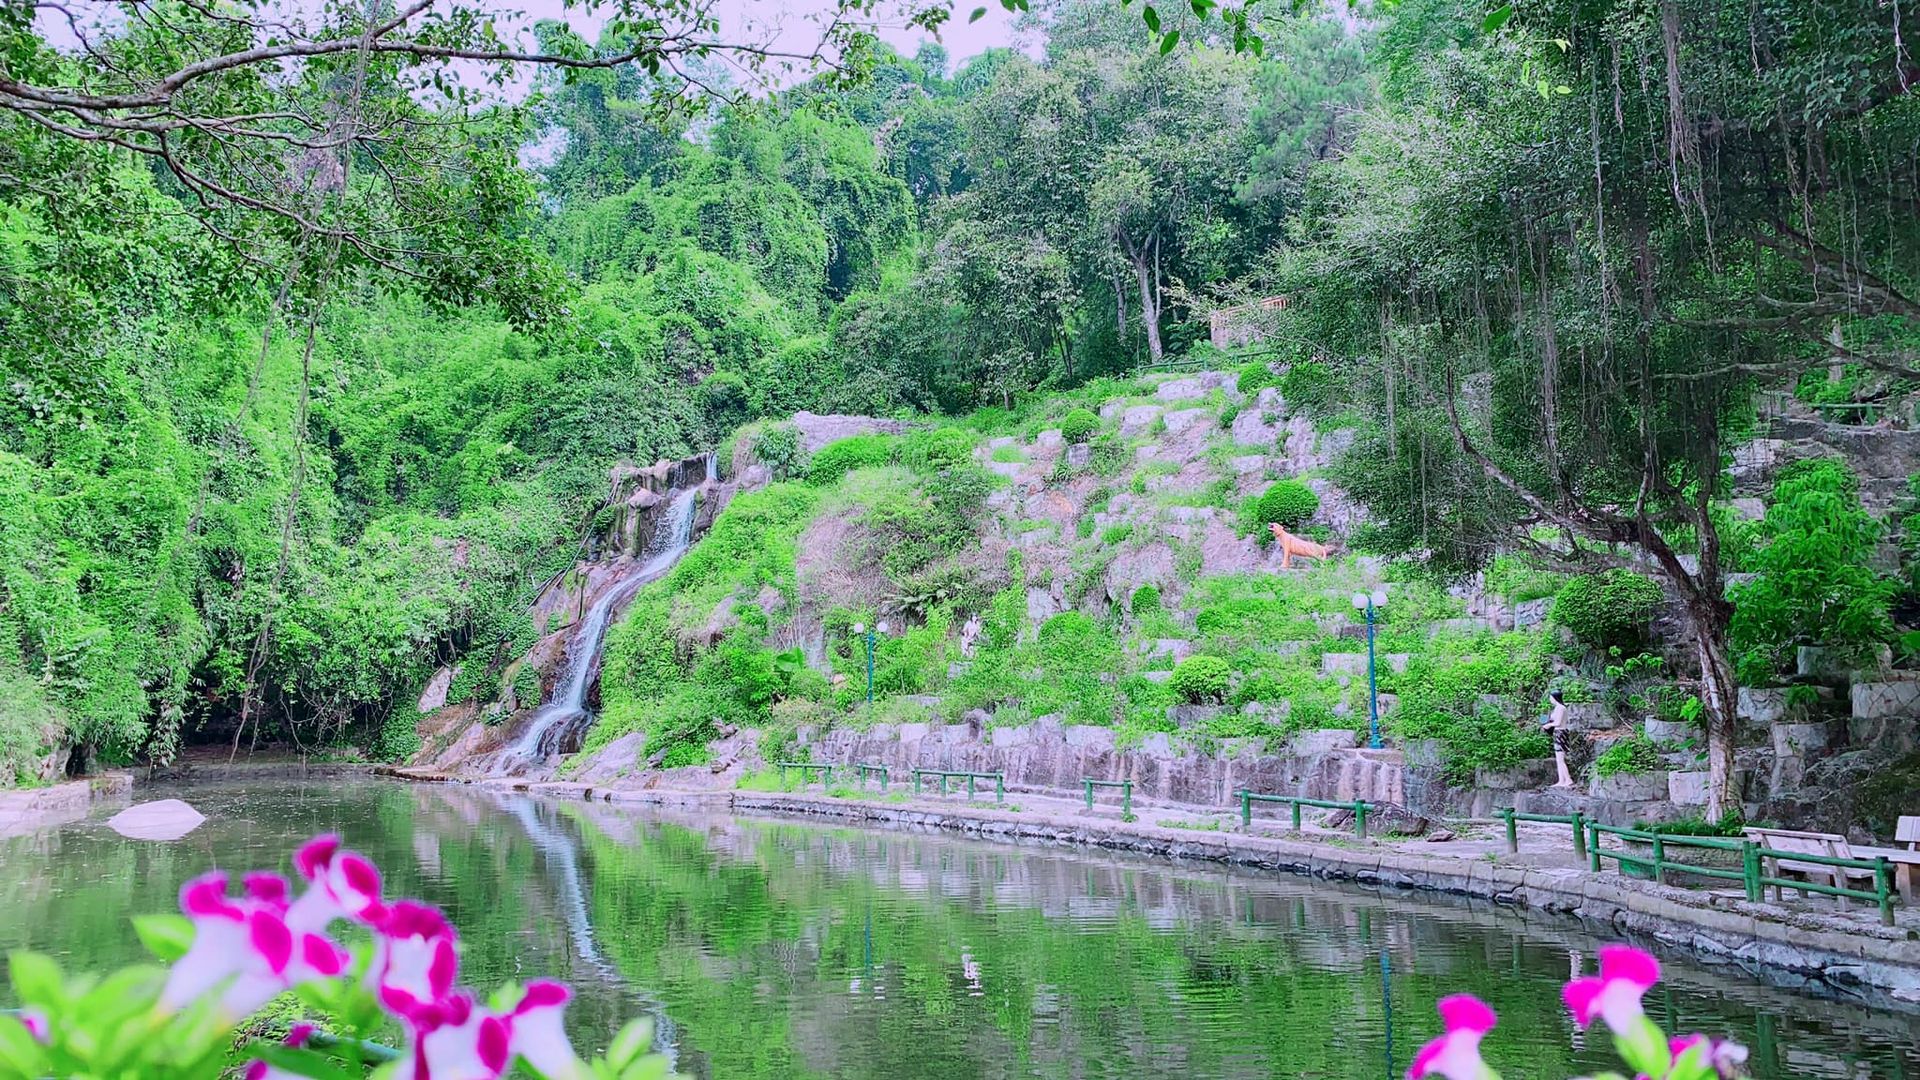 King's Pond tourist area in Ha Noi